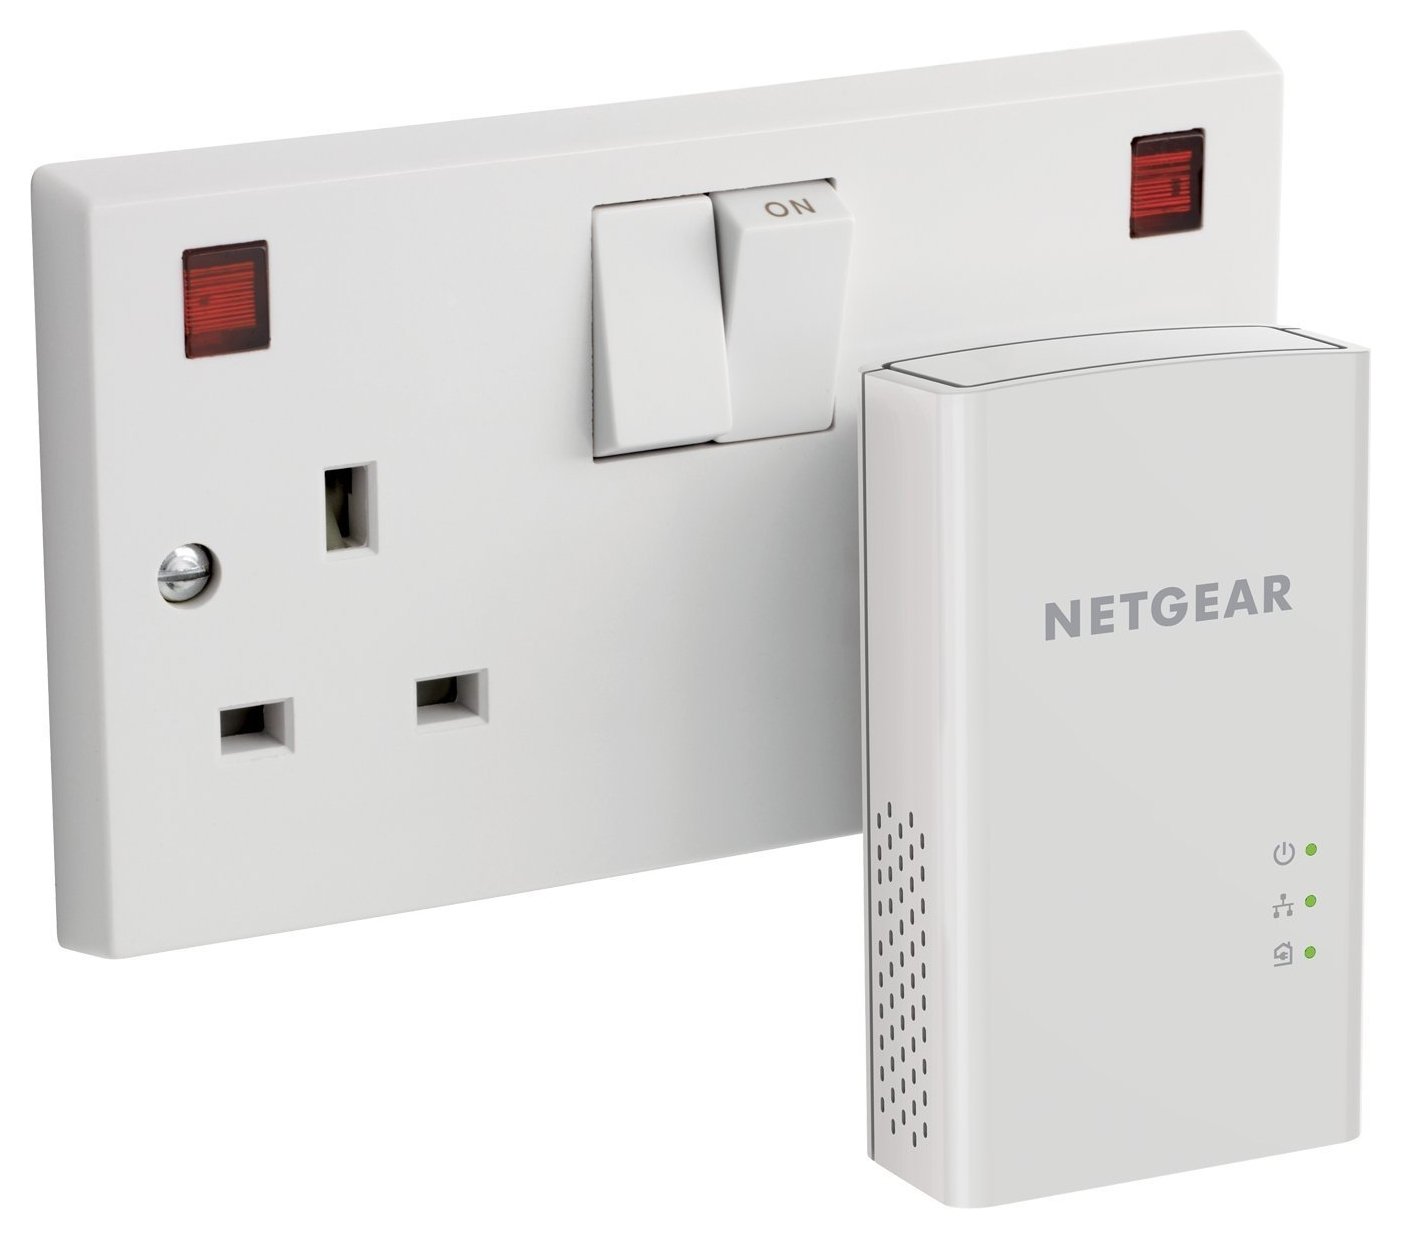 Netgear 1000Mbps Powerline Kit Review